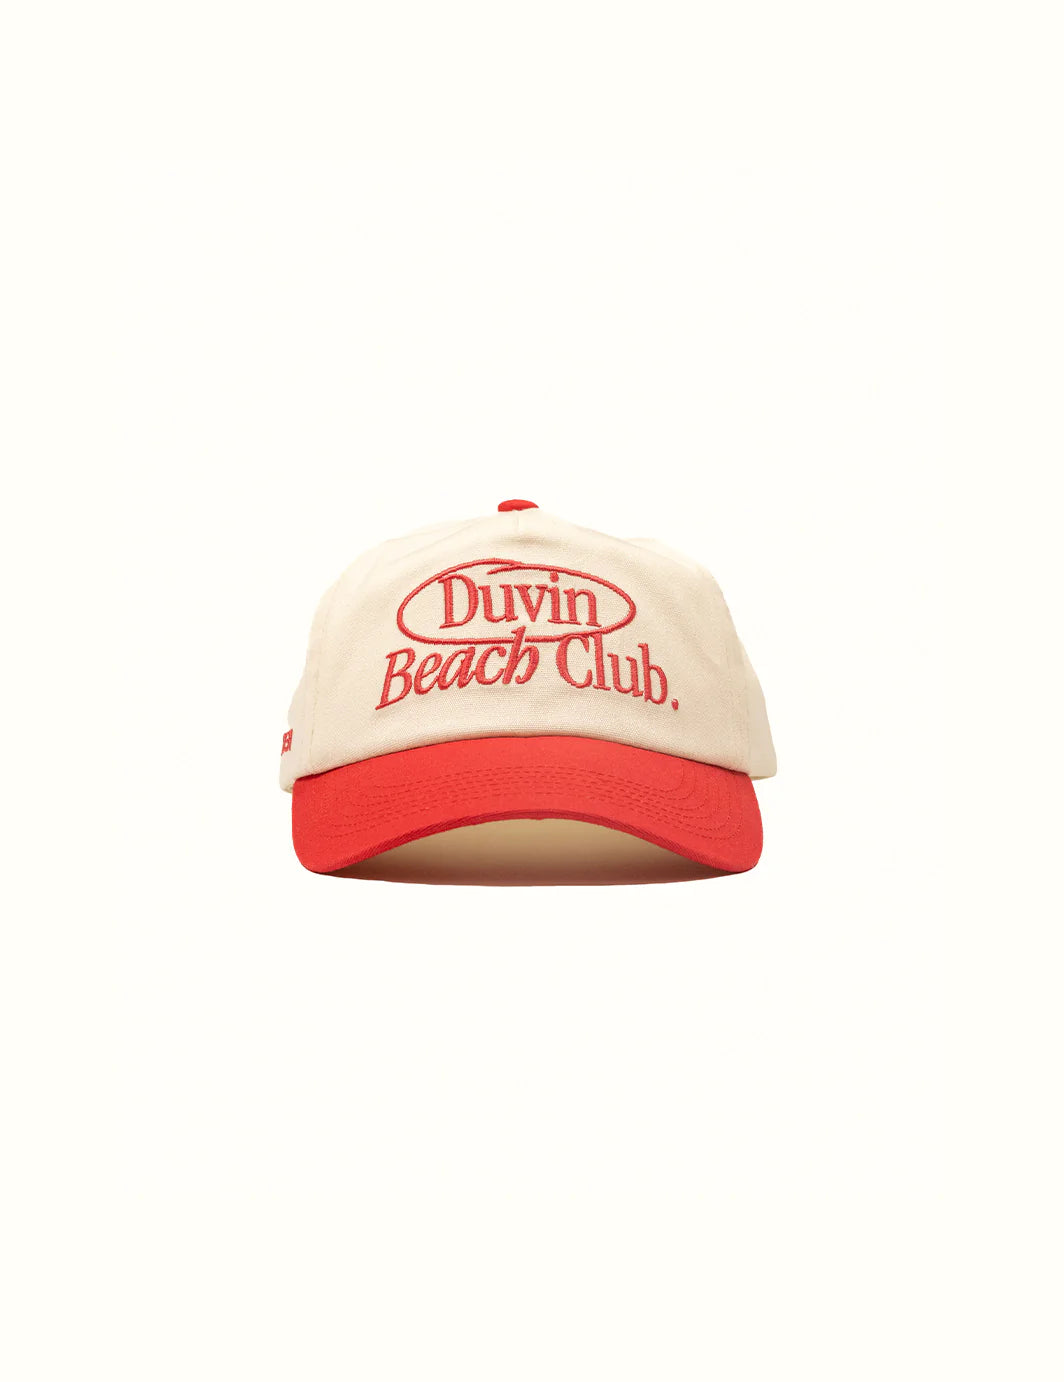 Duvin MEMBERS ONLY HAT  - RED - Sun Diego Boardshop